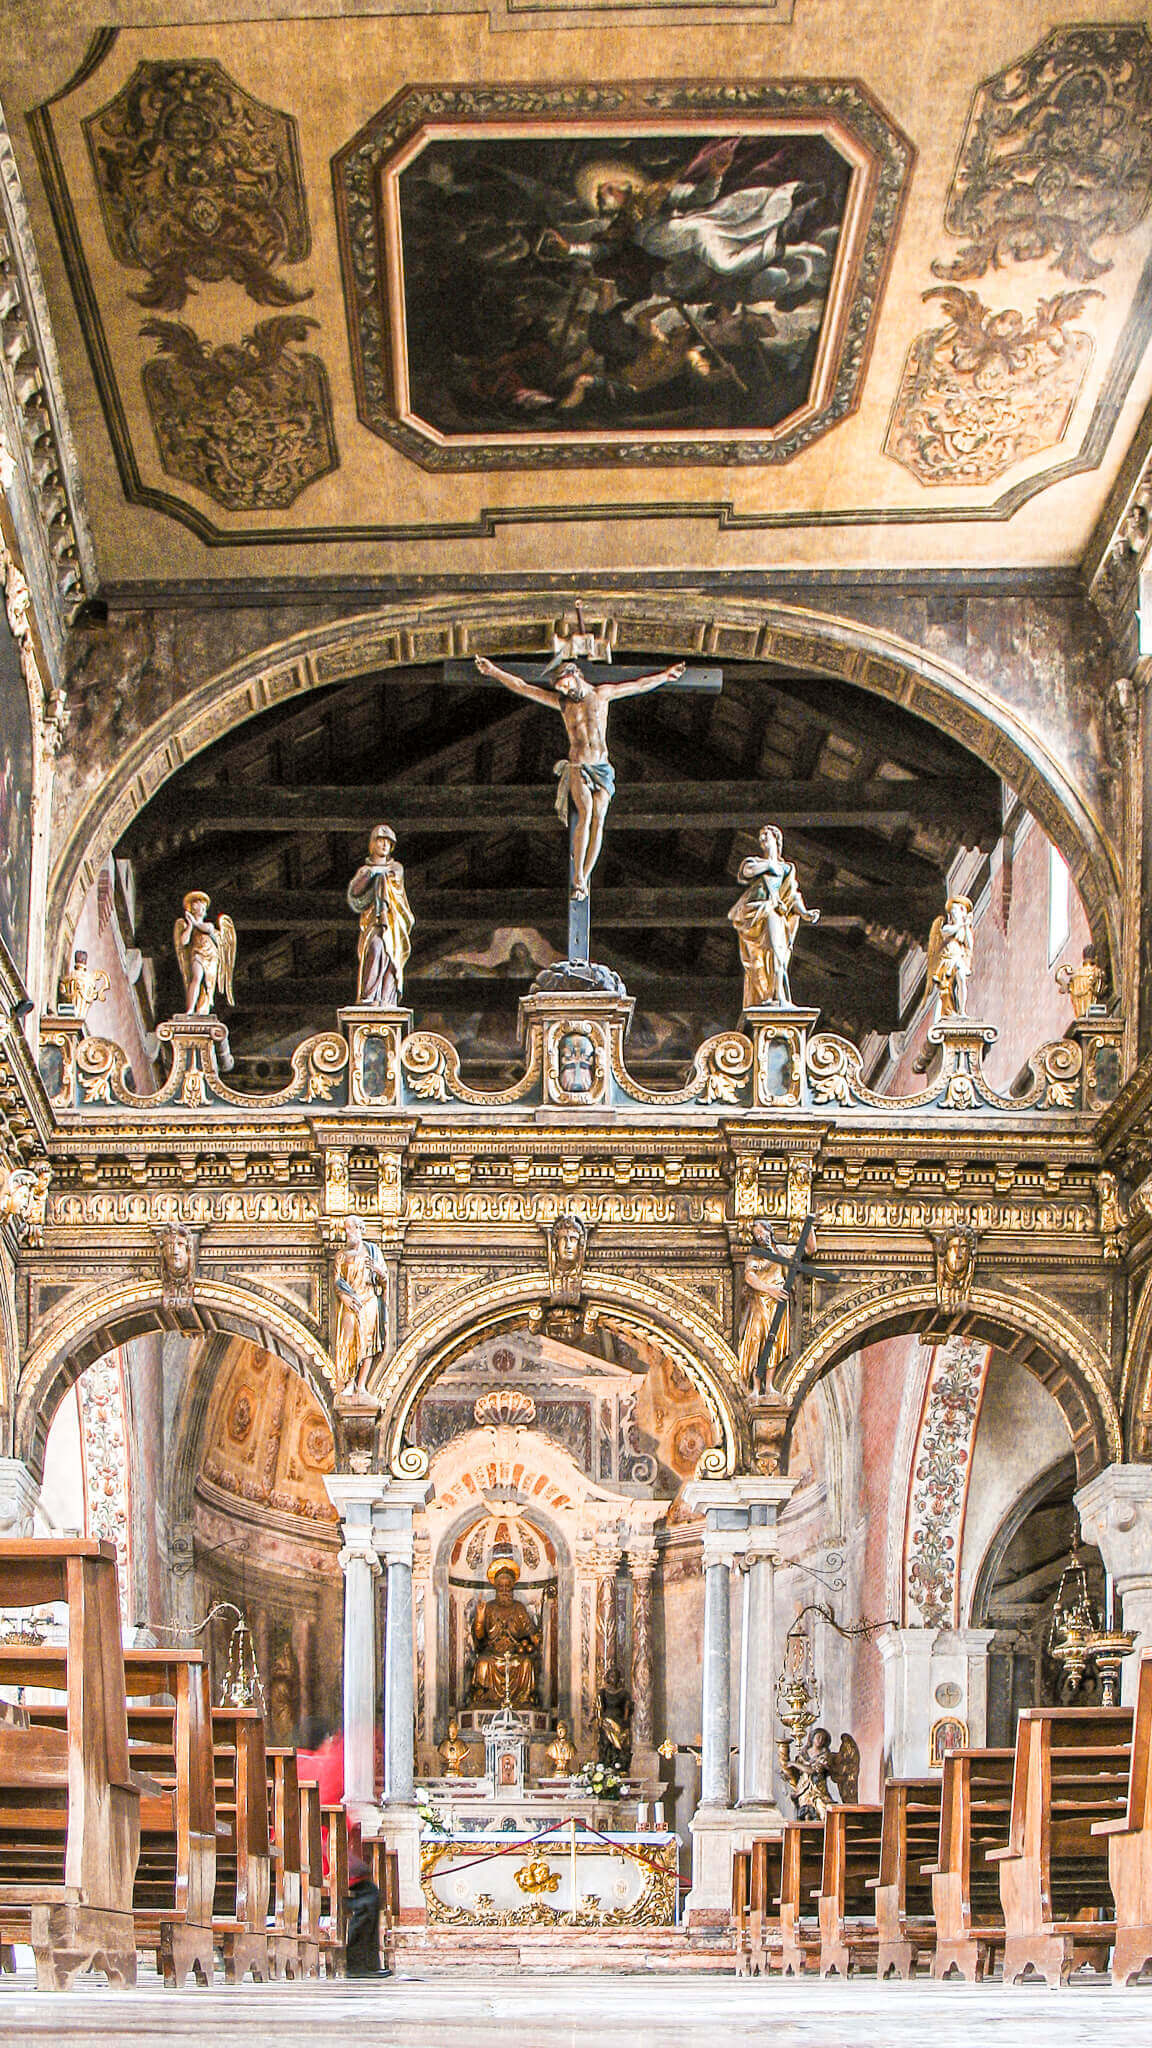 The interior of the San Nicolò church in Venice